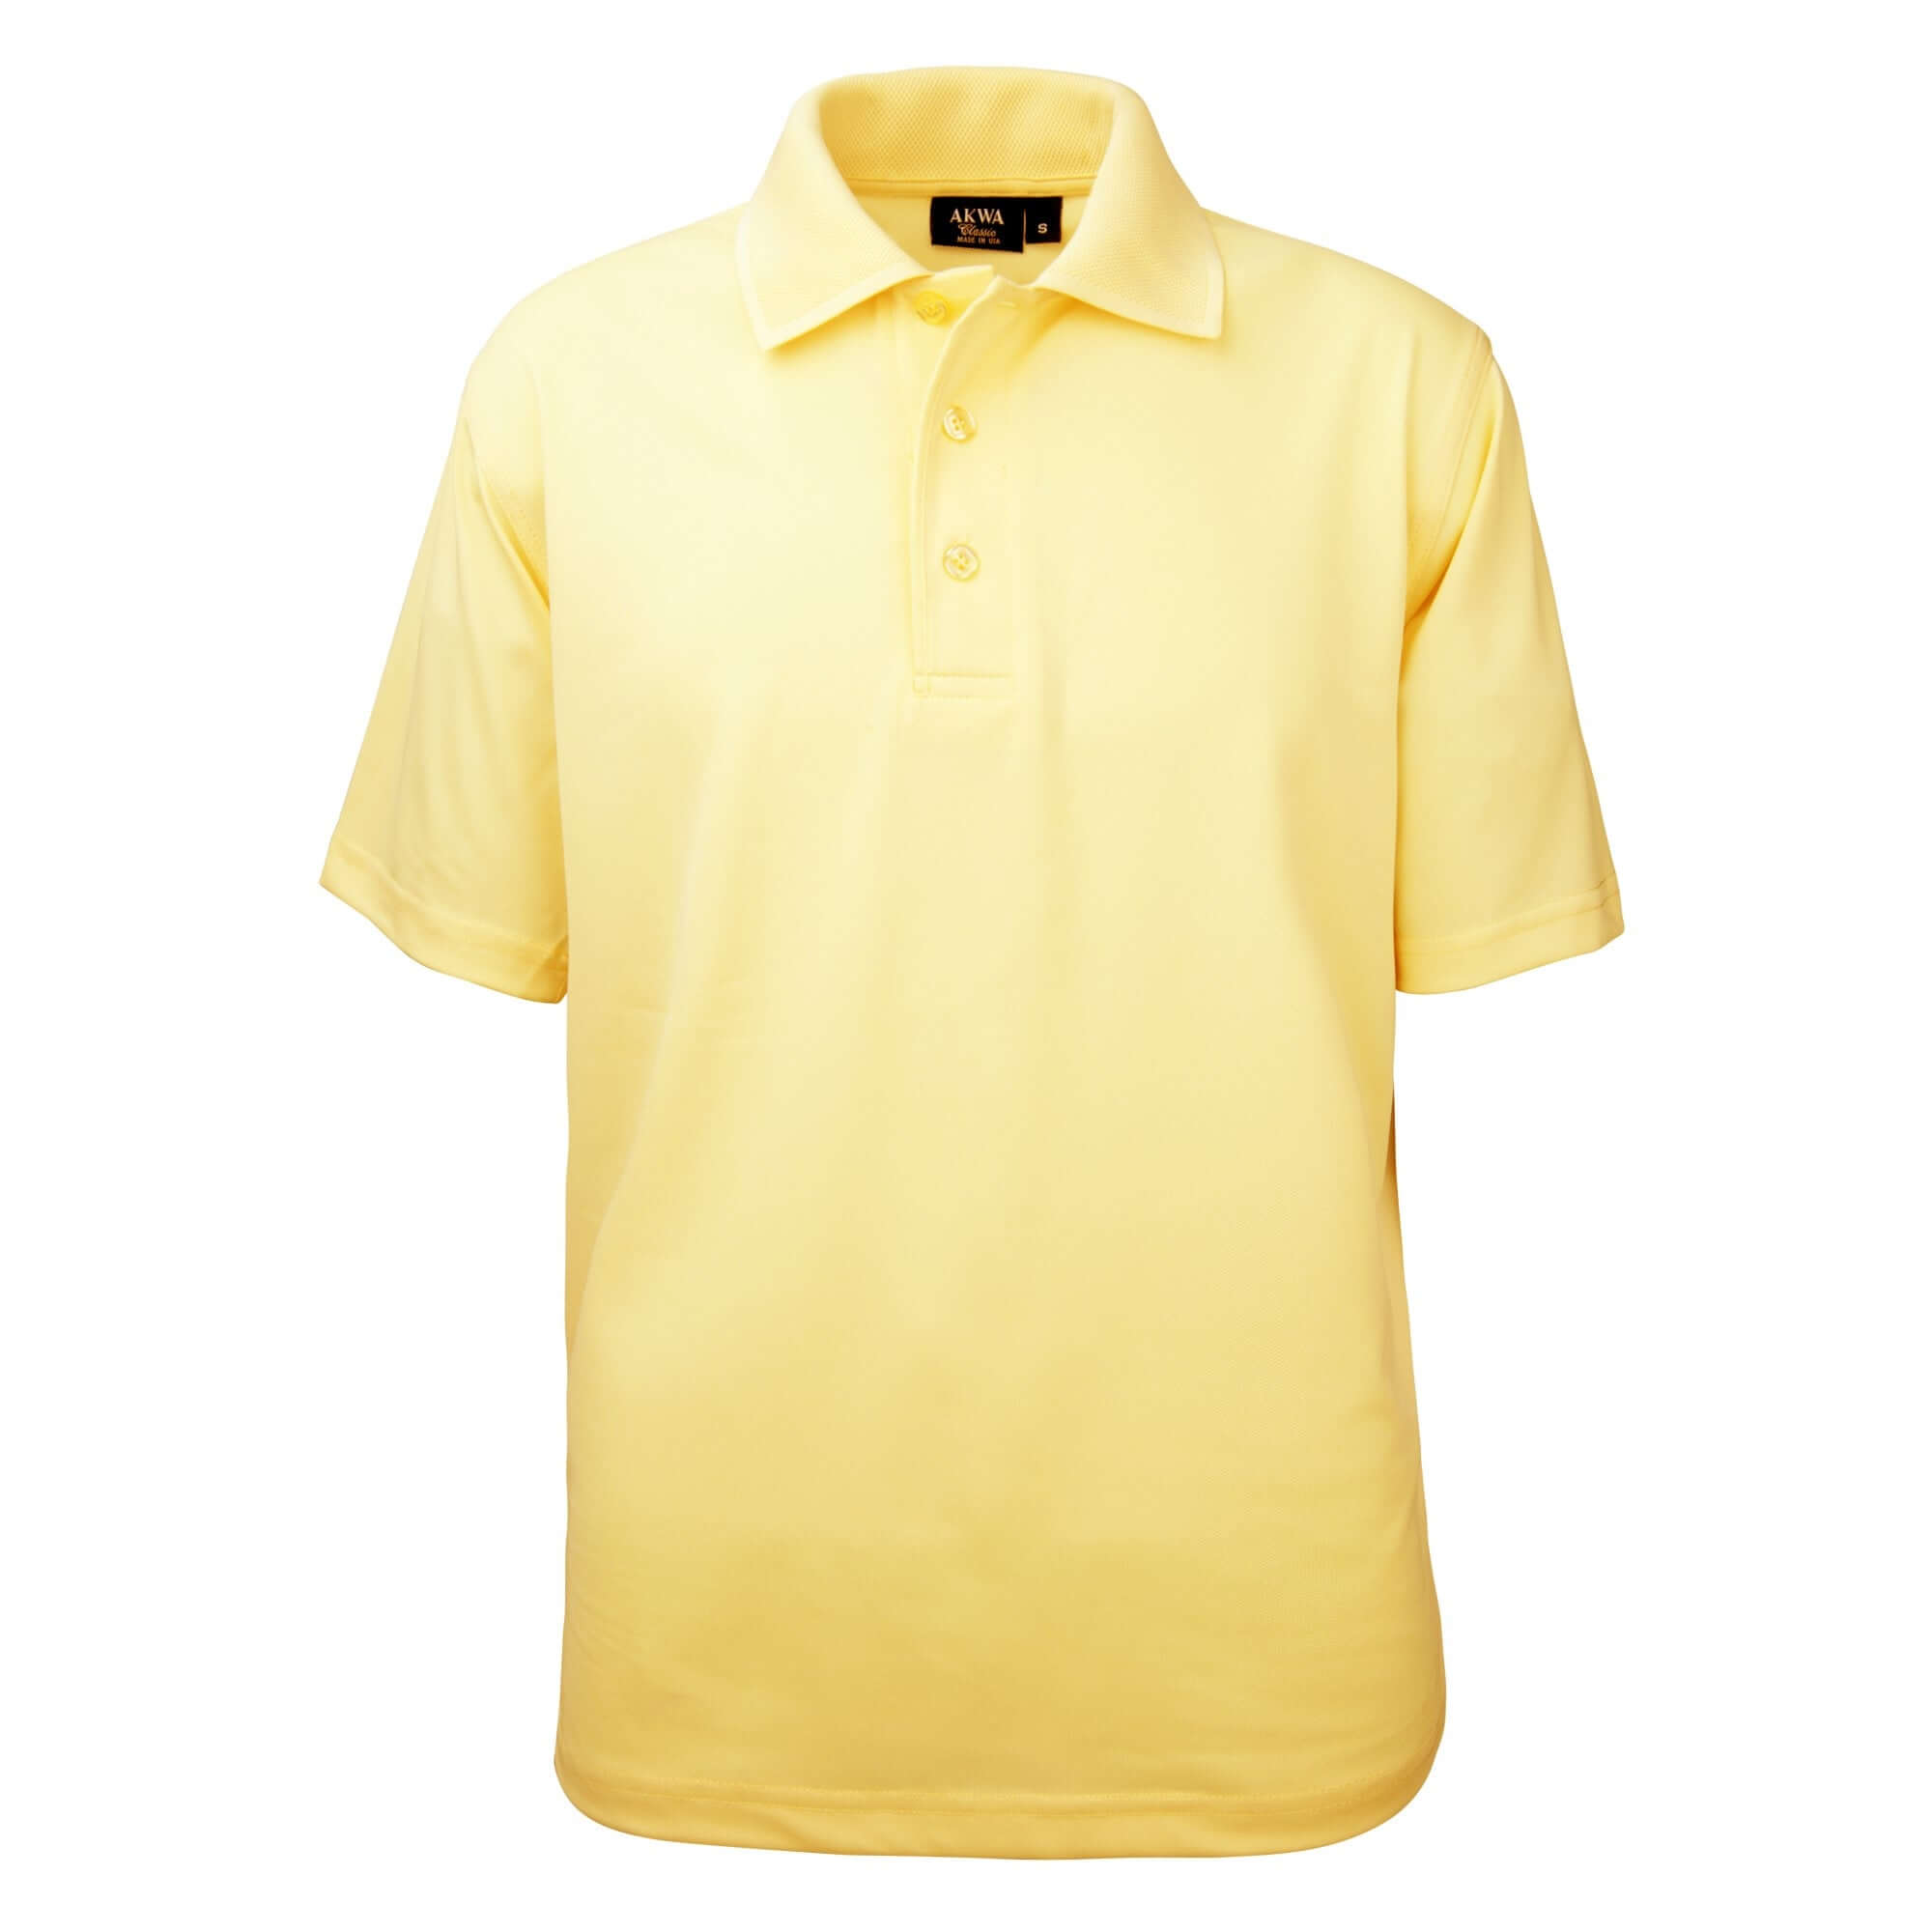 Men's Made in USA Tech Polo Shirt color_yellow - the flag shirts